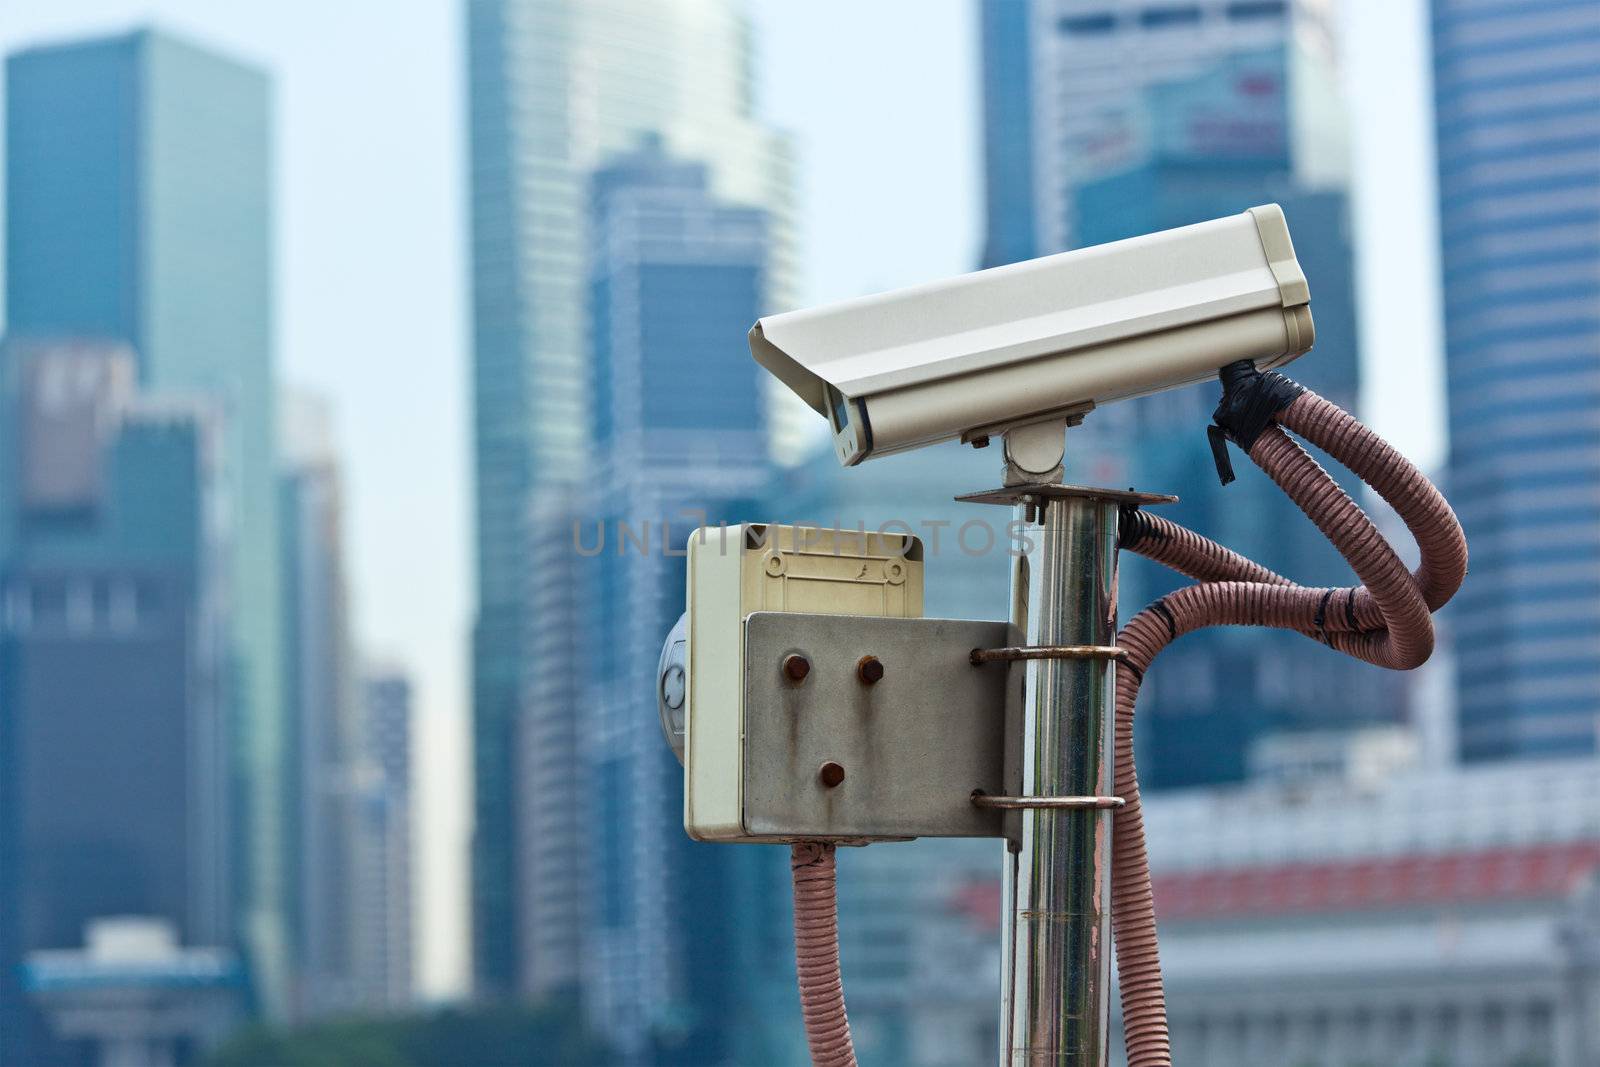 CCTV surveillance camera in Singapore by dimol